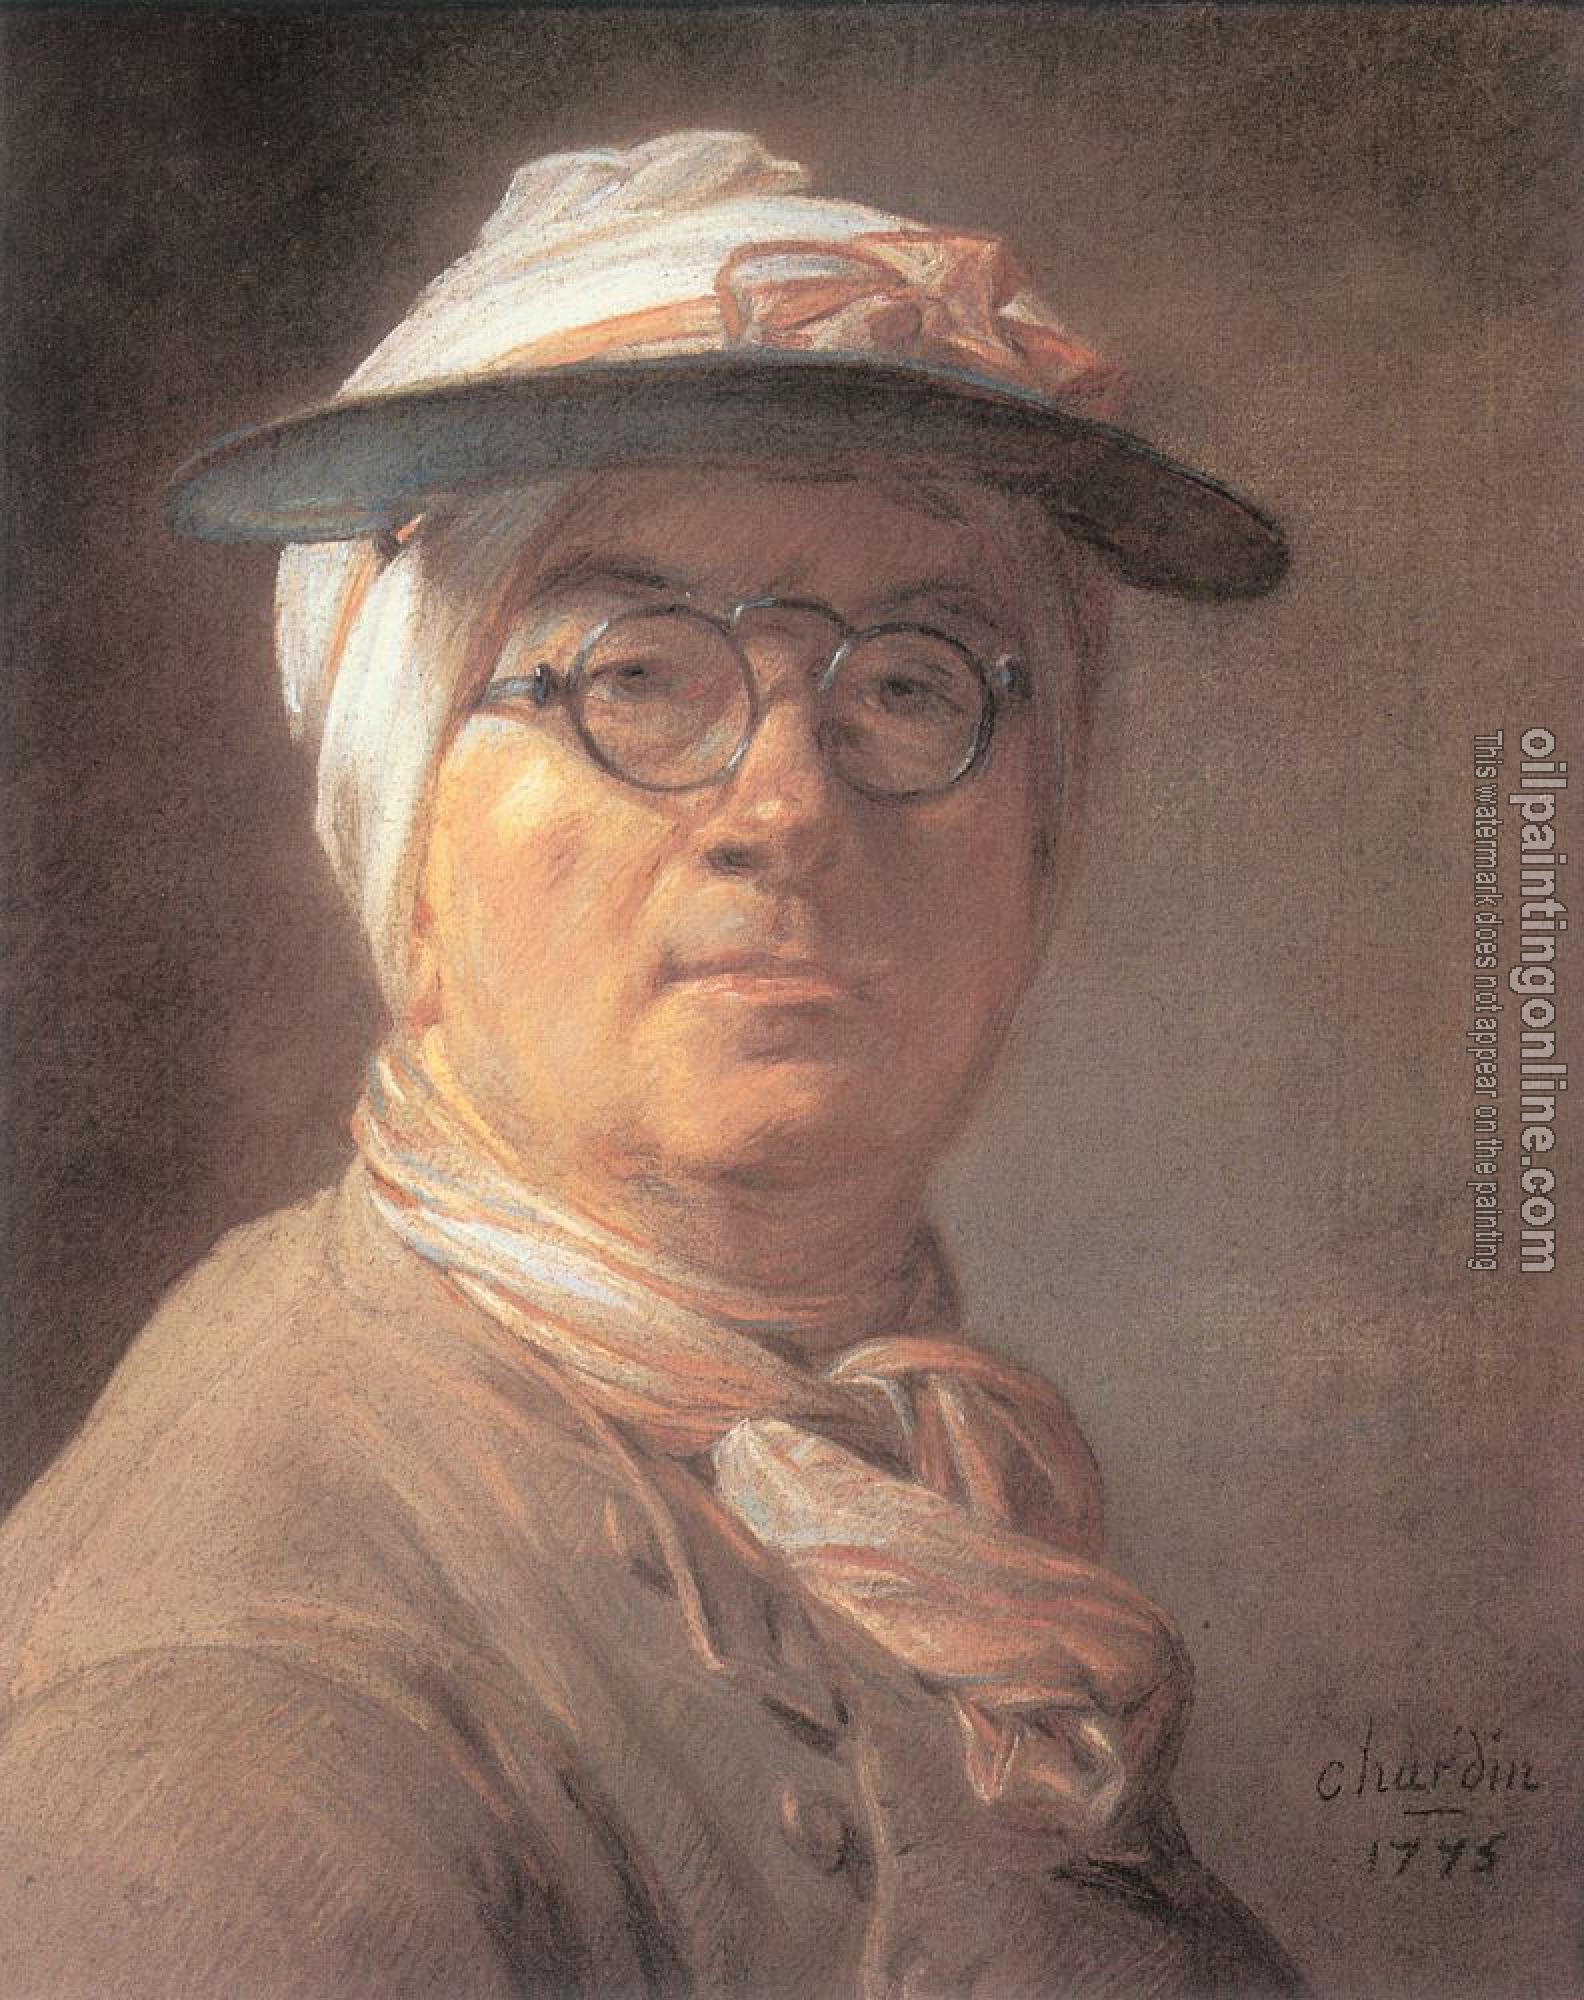 Chardin, Jean Baptiste Simeon - Self-Portrait with an Eye-Shade